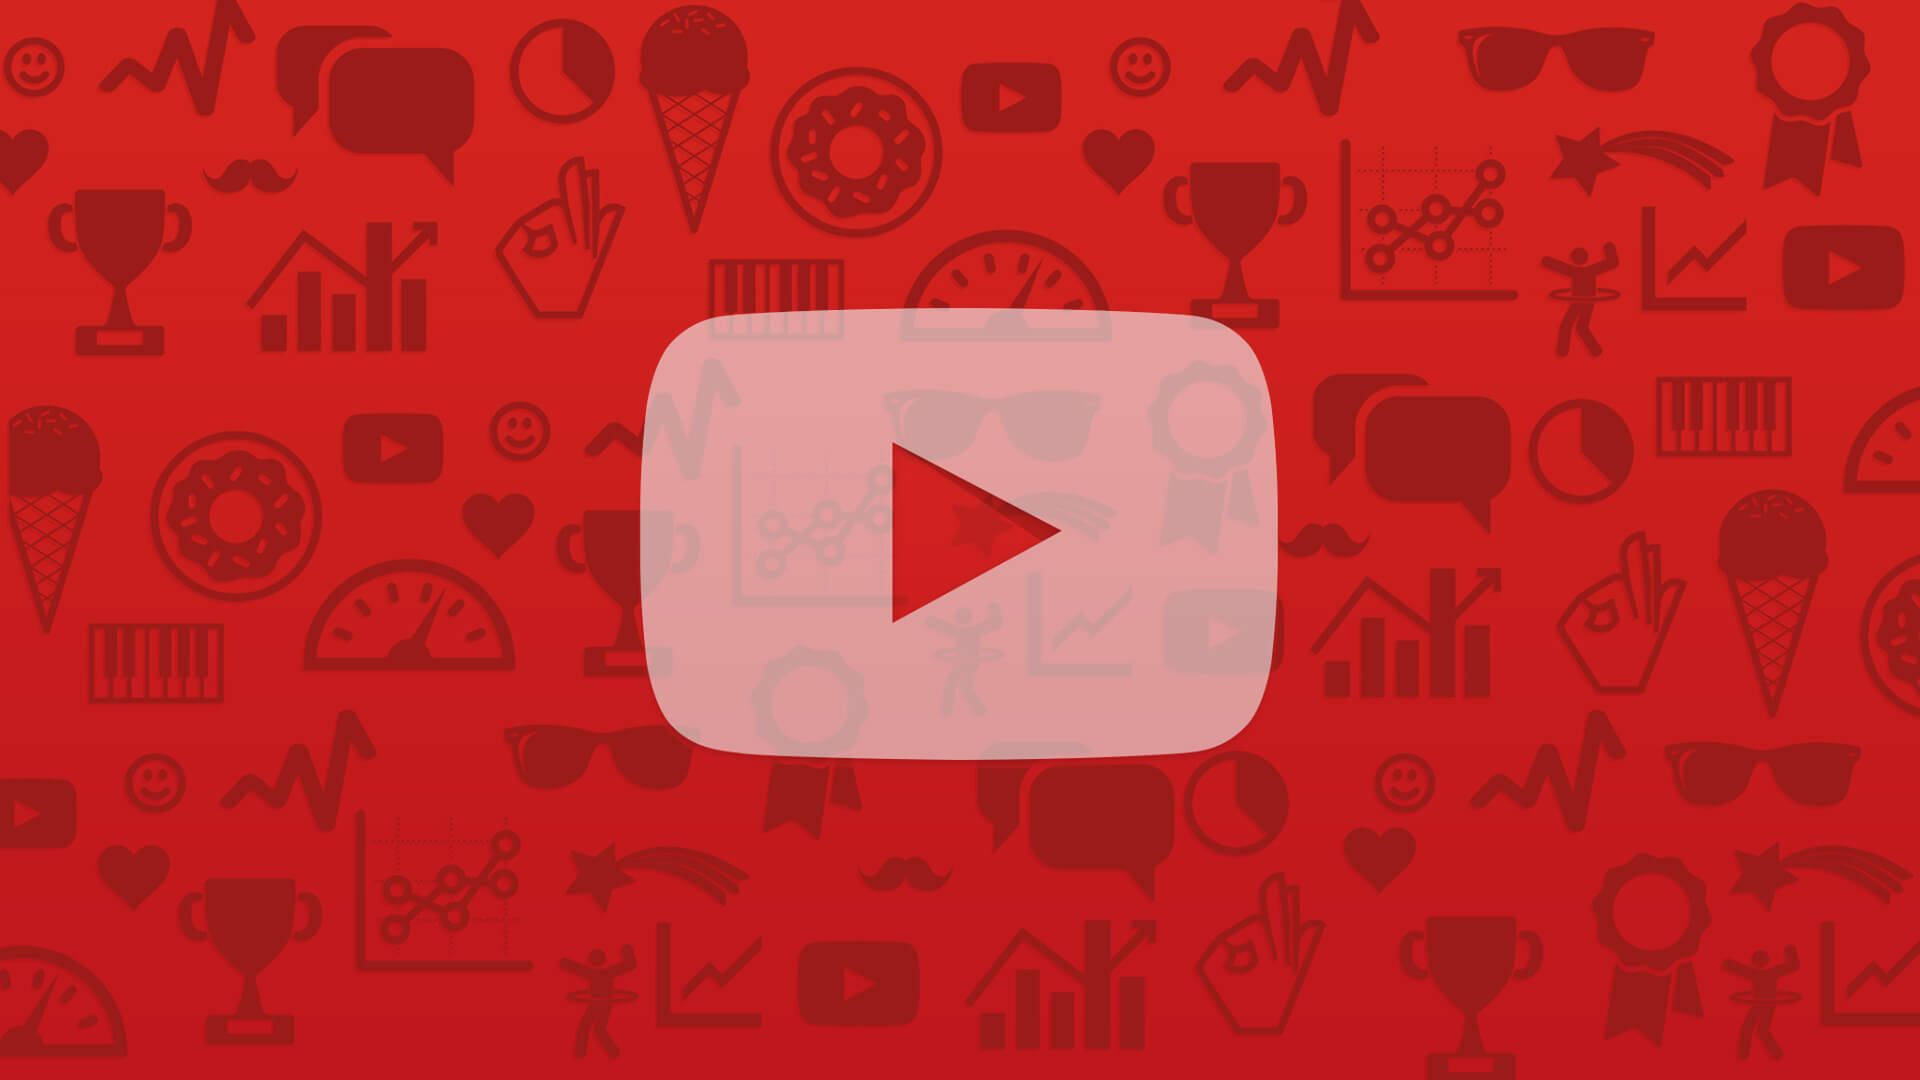 Vibrant YouTube logo against a doodle filled backdrop Wallpaper